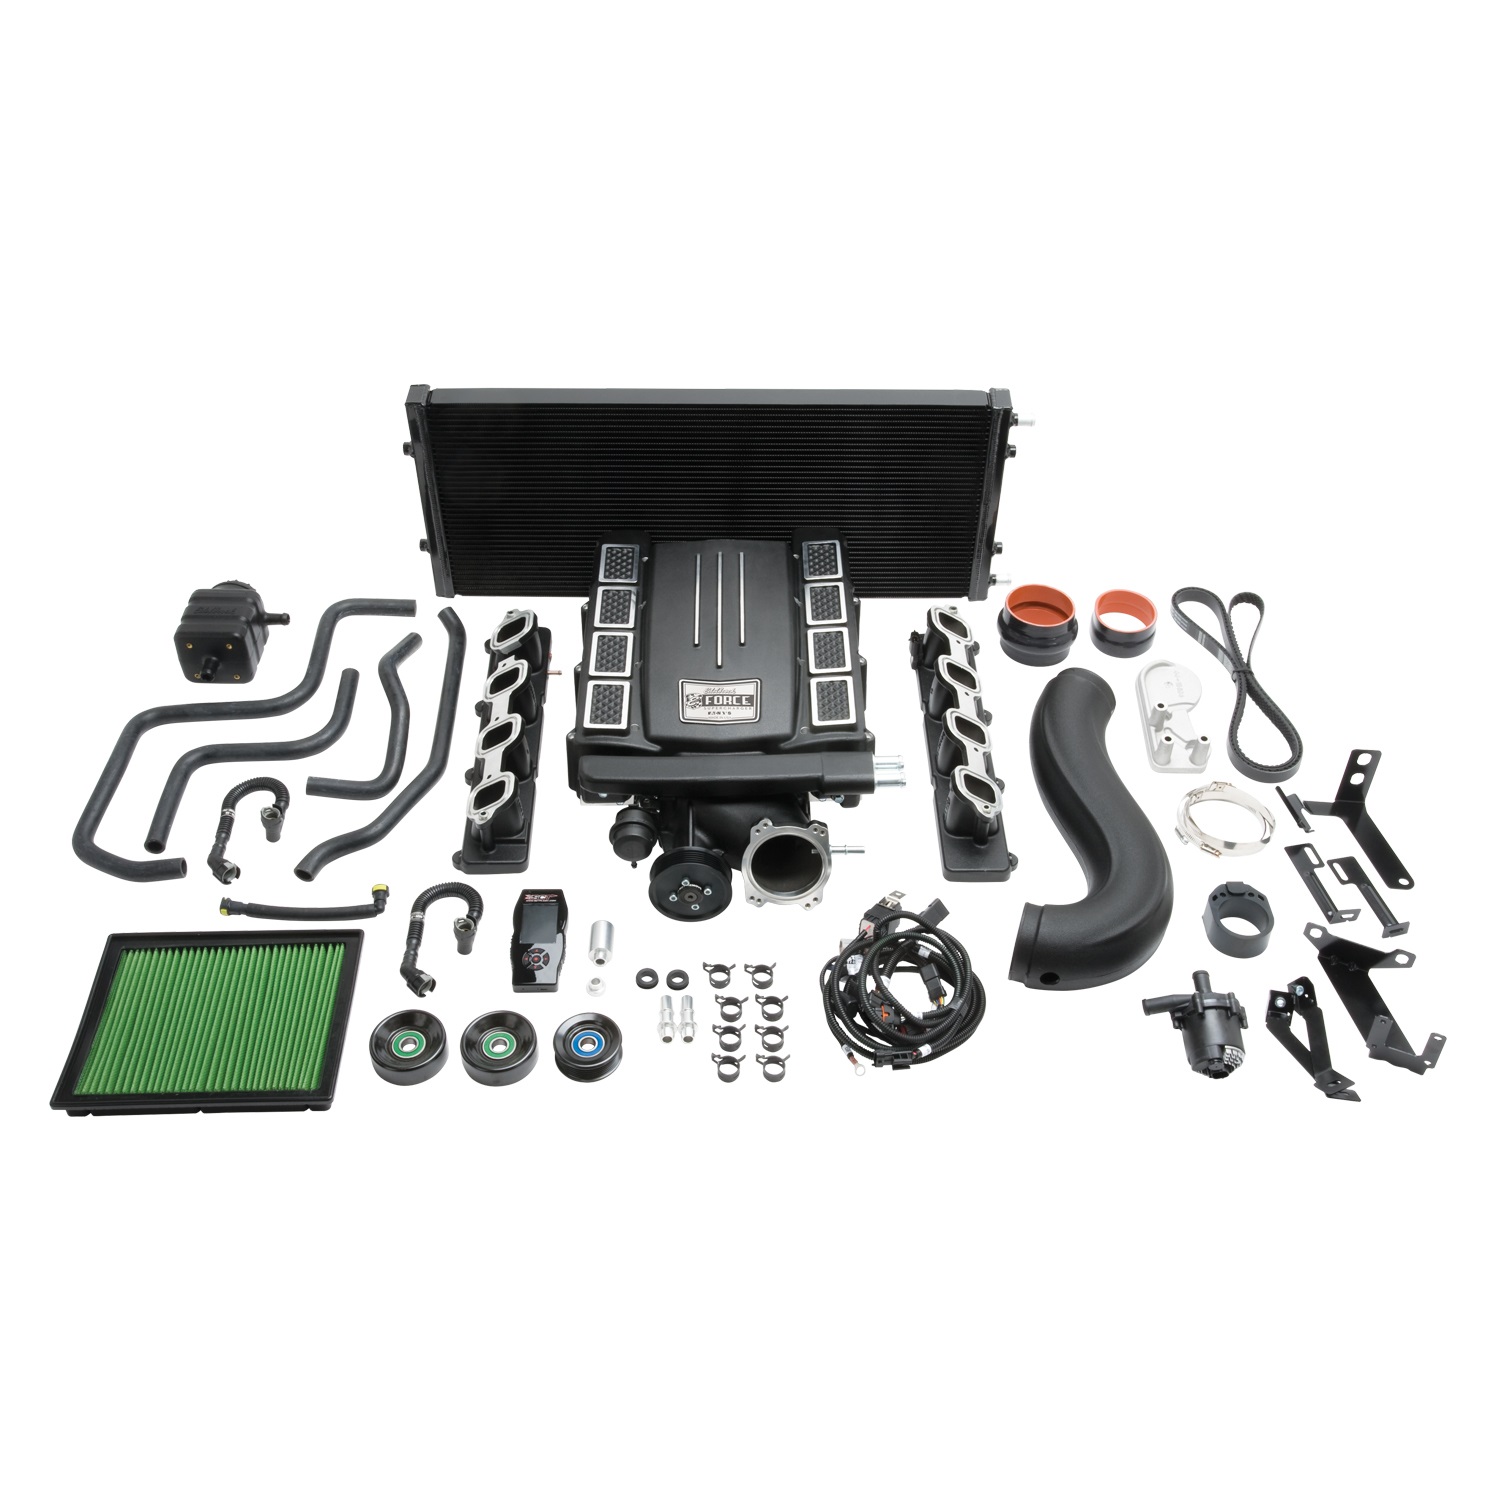 Edelbrock Supercharger, Stage 1-Street Kit, 2014, Chevrolet/GMC, Silveraldo/Sierra 1500 Trucks/SUVs, 5.3l, With Tuner, Part# 156